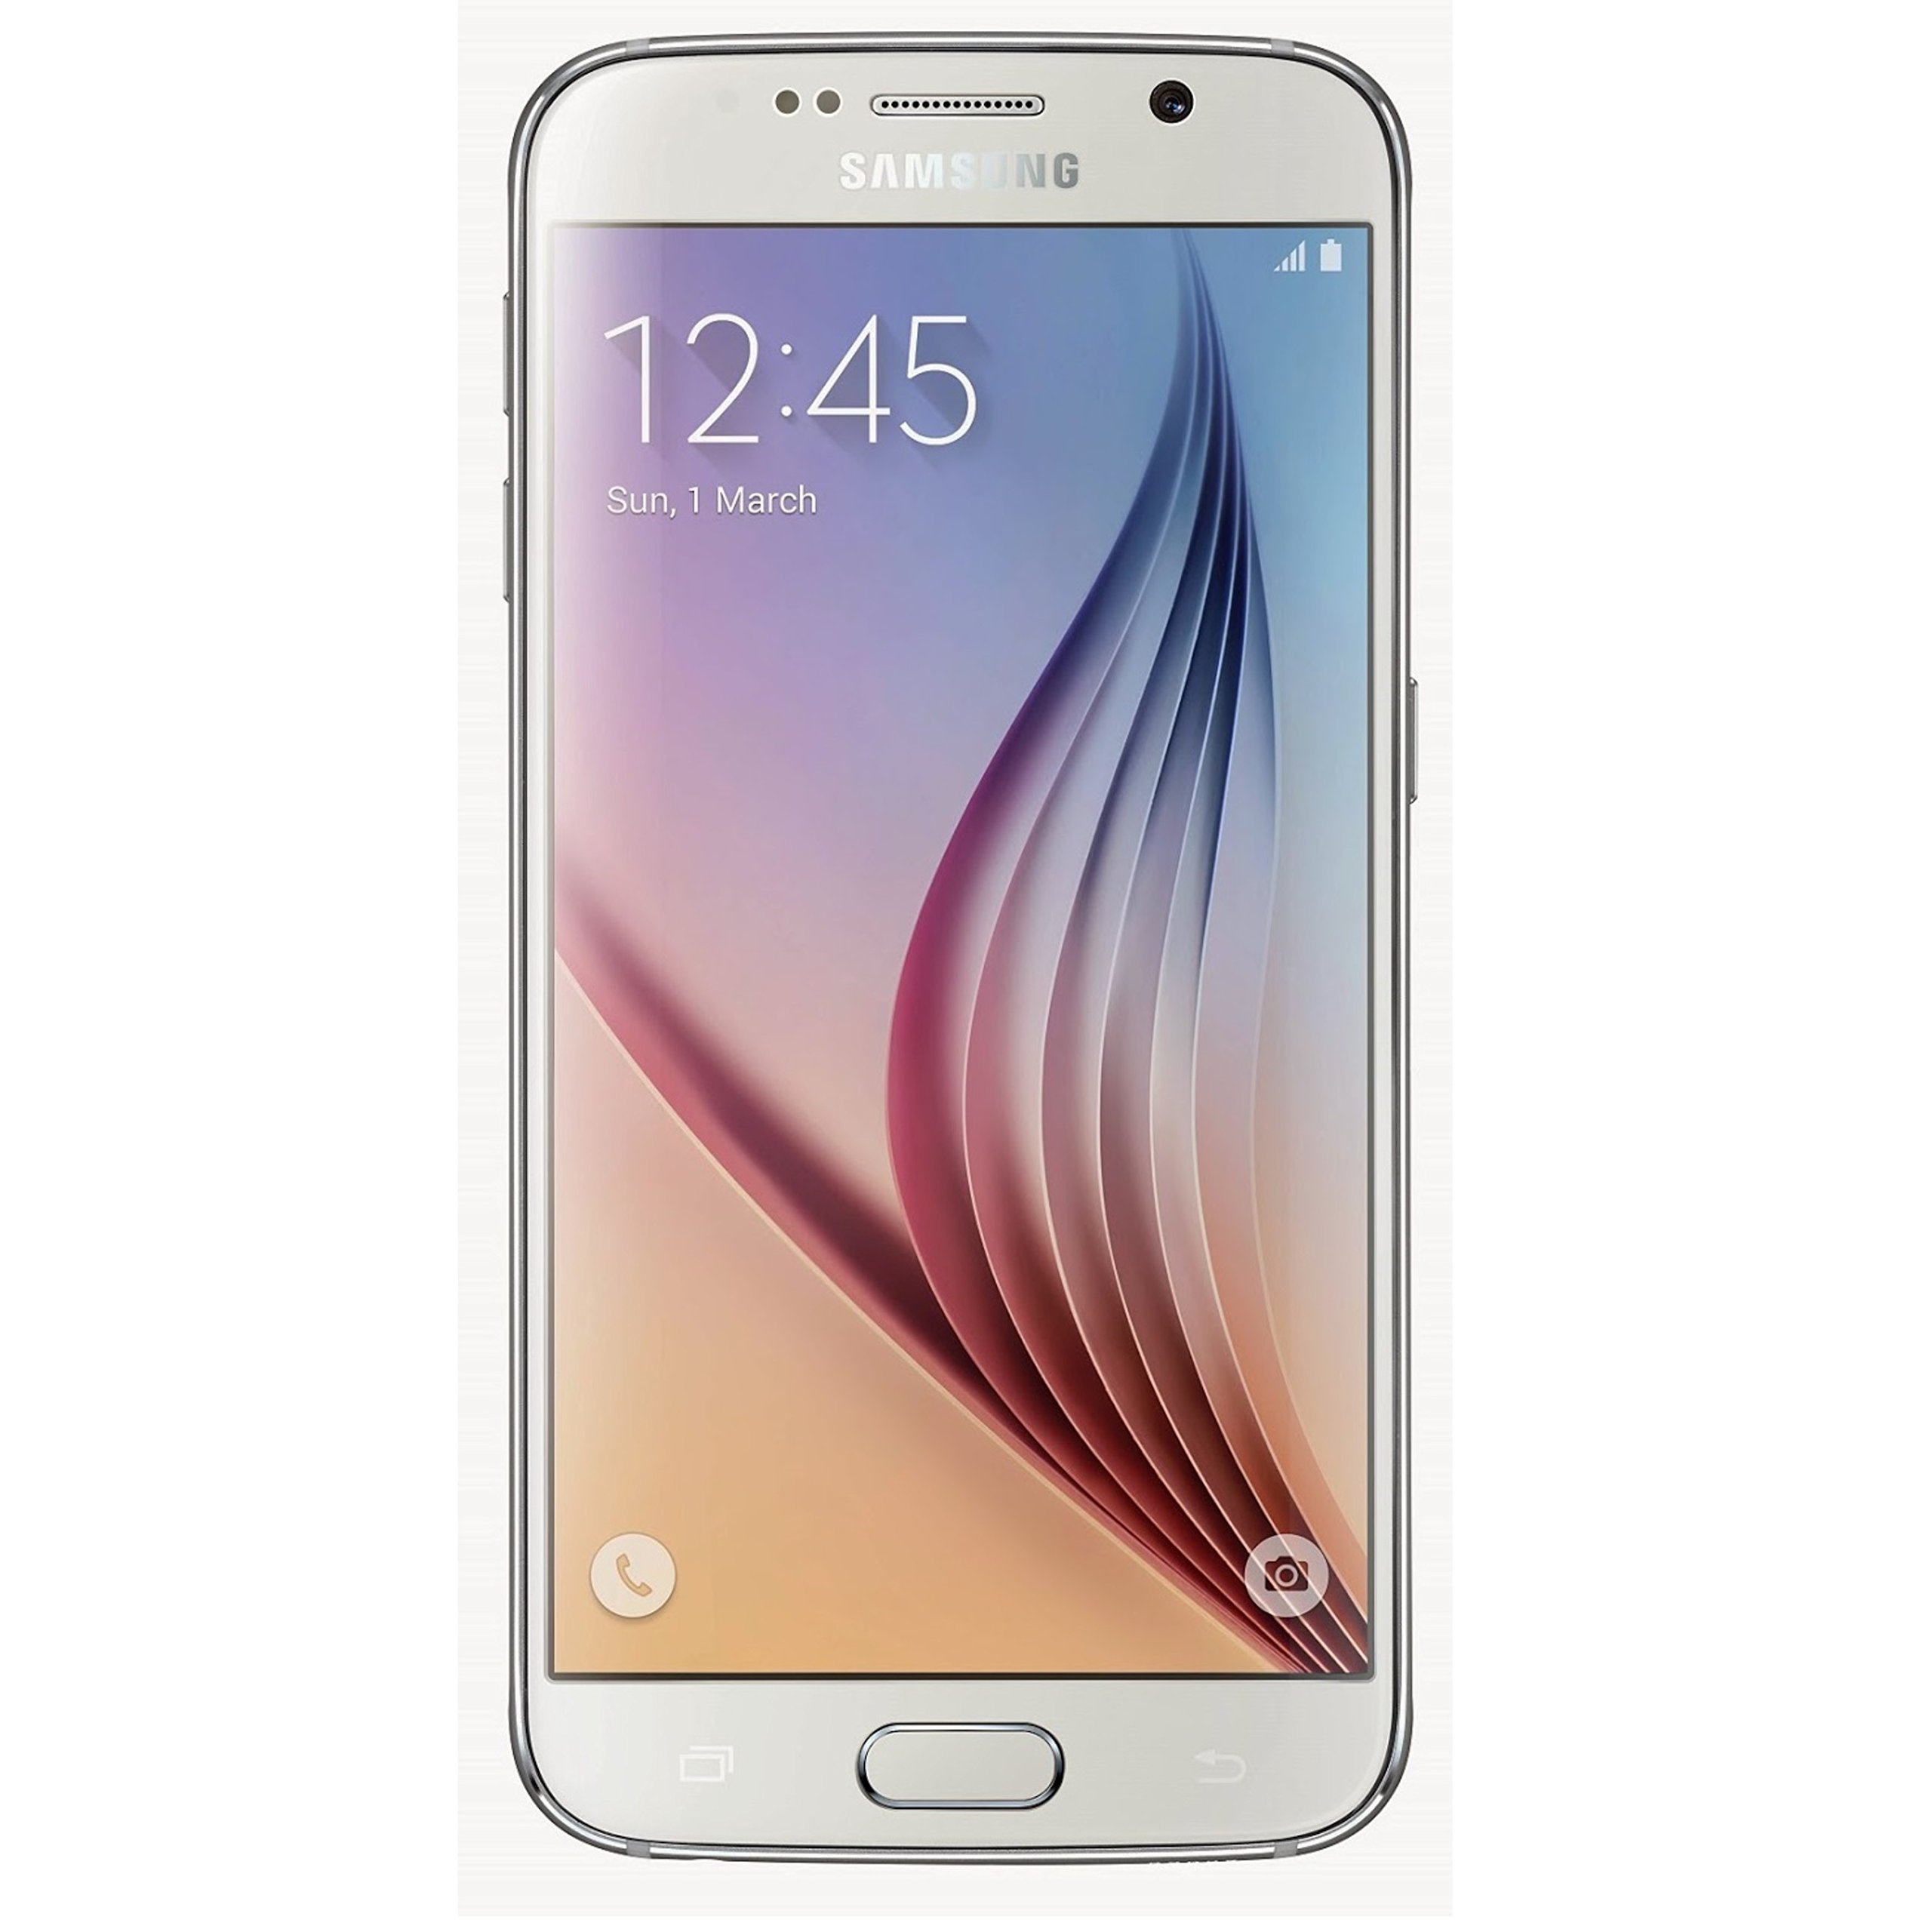 Samsung Galaxy S6 Smartphone simlockfrei, Android, Bildschirm 13 cm (5,1 Zoll), Kamera 16 MP, 32 GB, Quad Core 2,1 GHz, 3 GB RAM